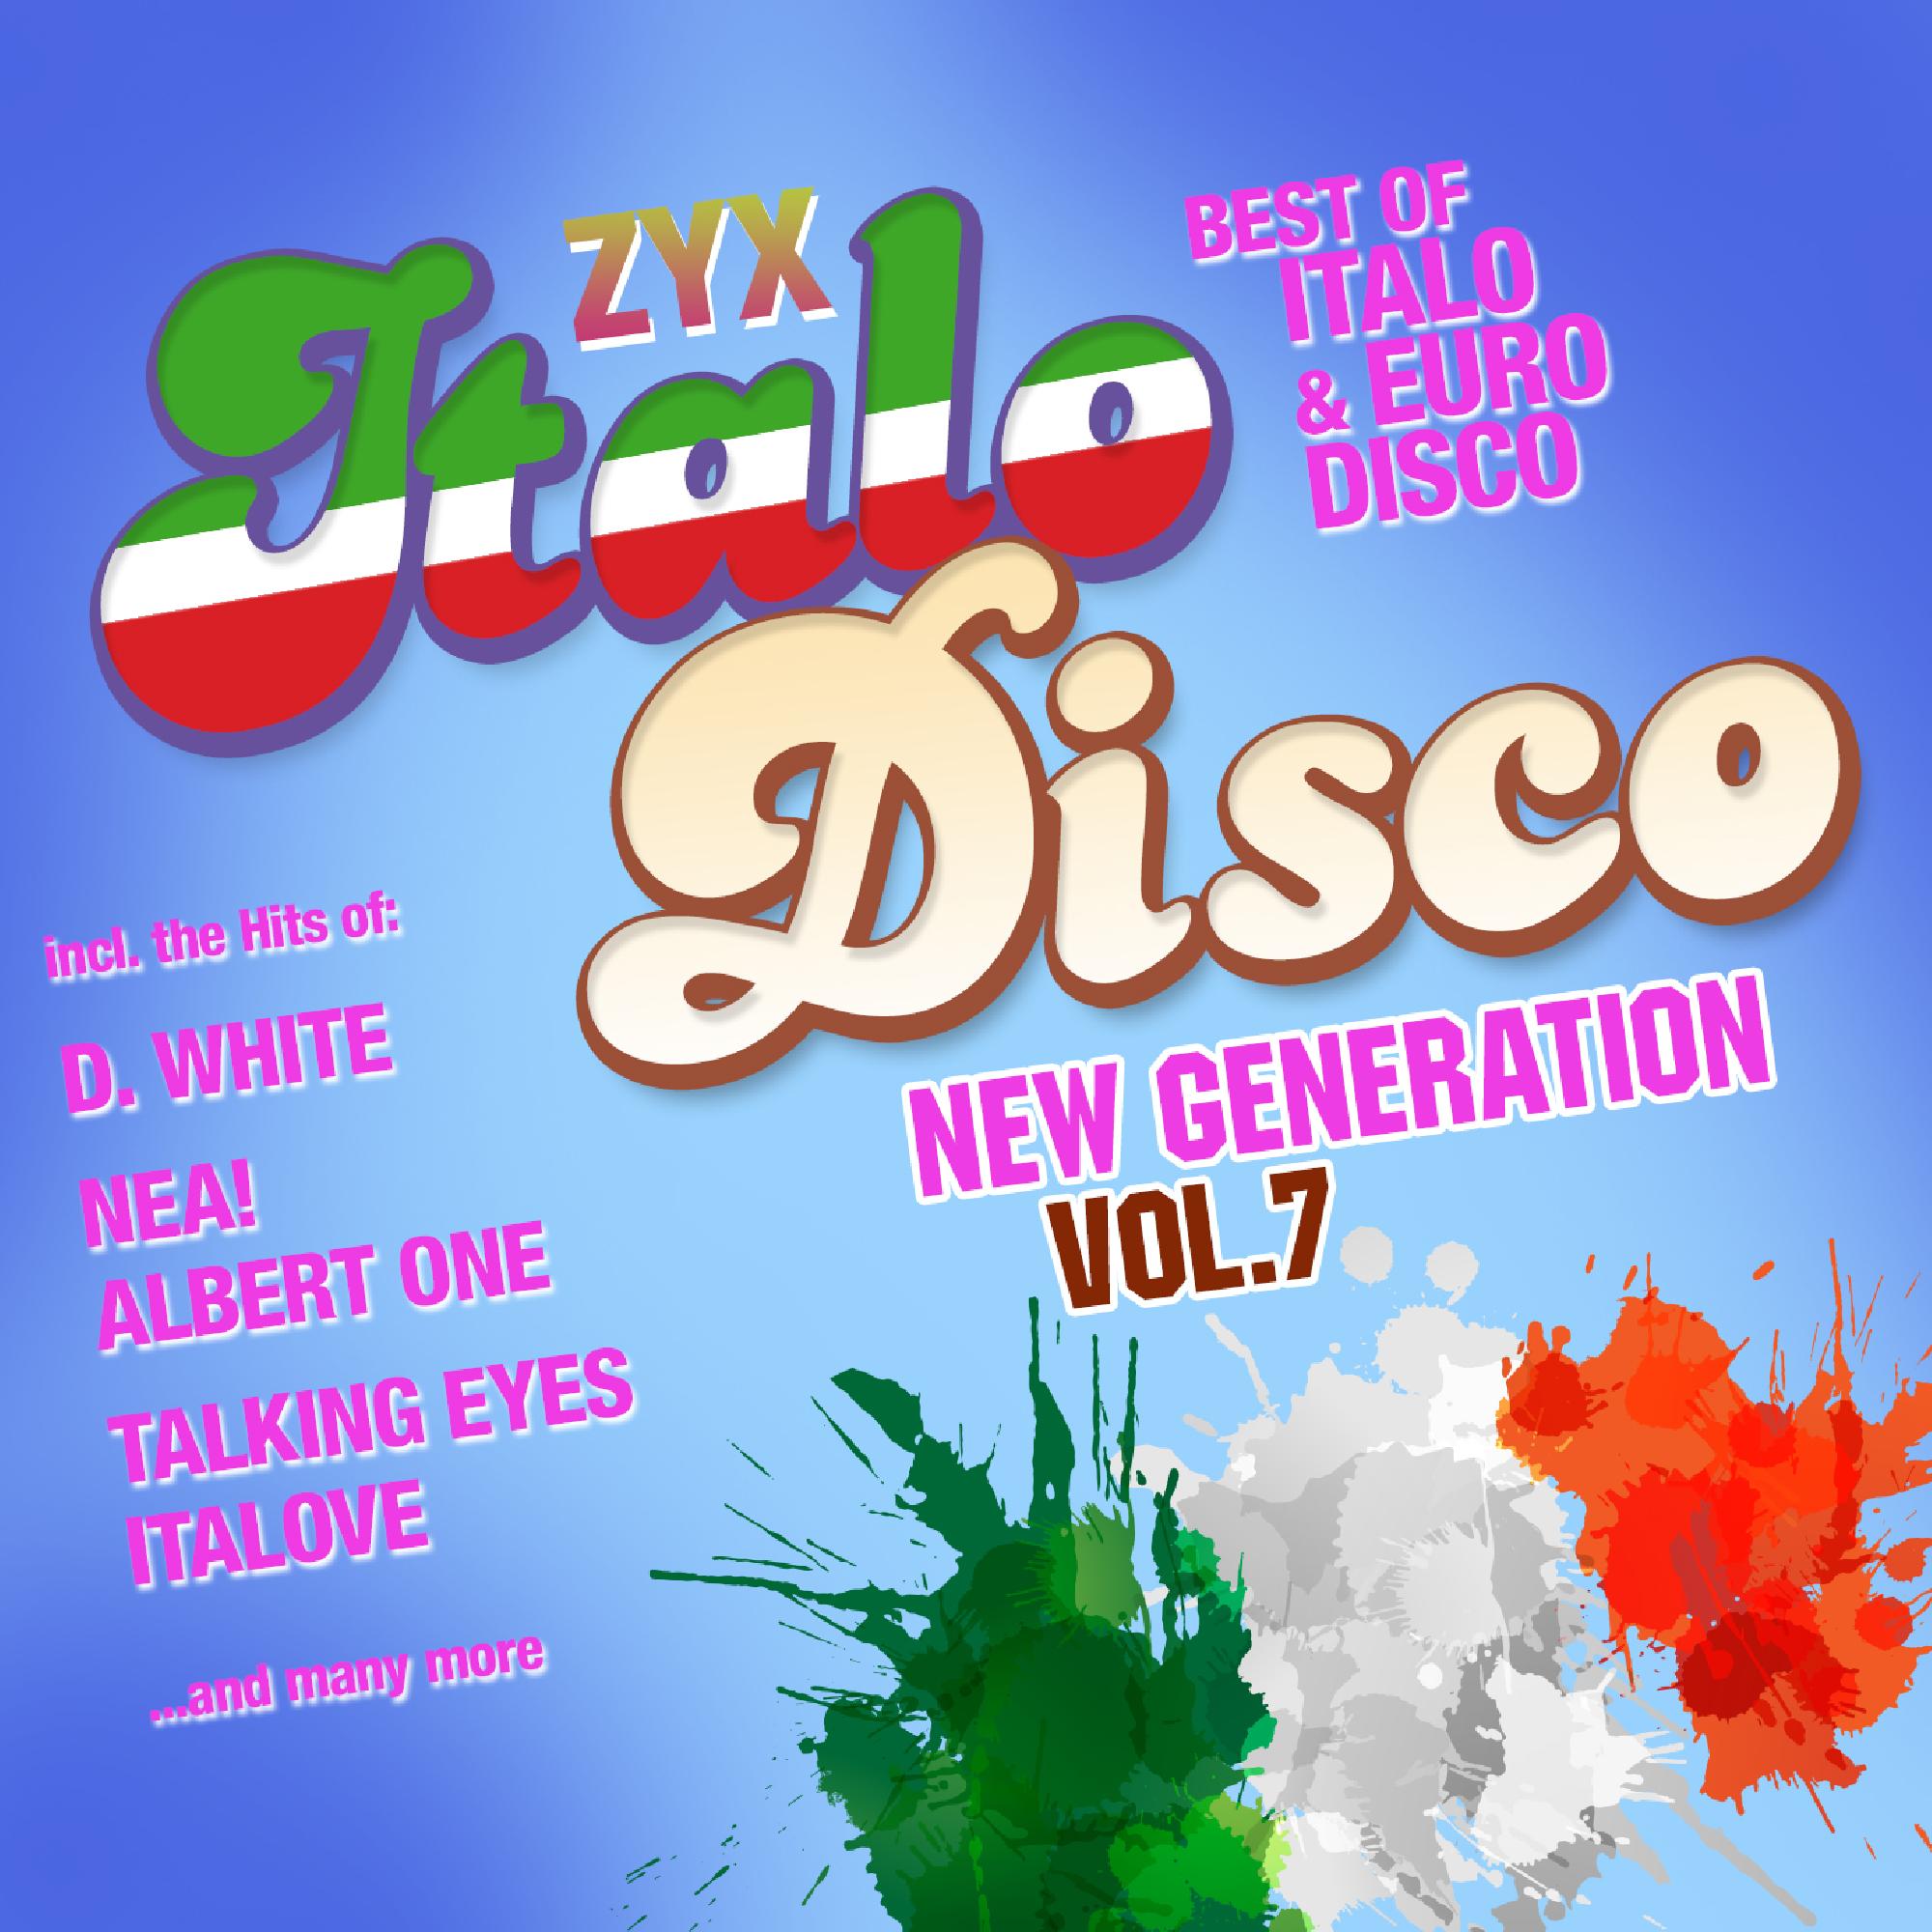 Italo disco new mp3. ZYX Italo Disco New Generation Vol 7 CD 1. ZYX Italo Disco New Generation Vol 7 CD 2. ZYX Italo Disco New. Va - ZYX Italo Disco New Generation 20.